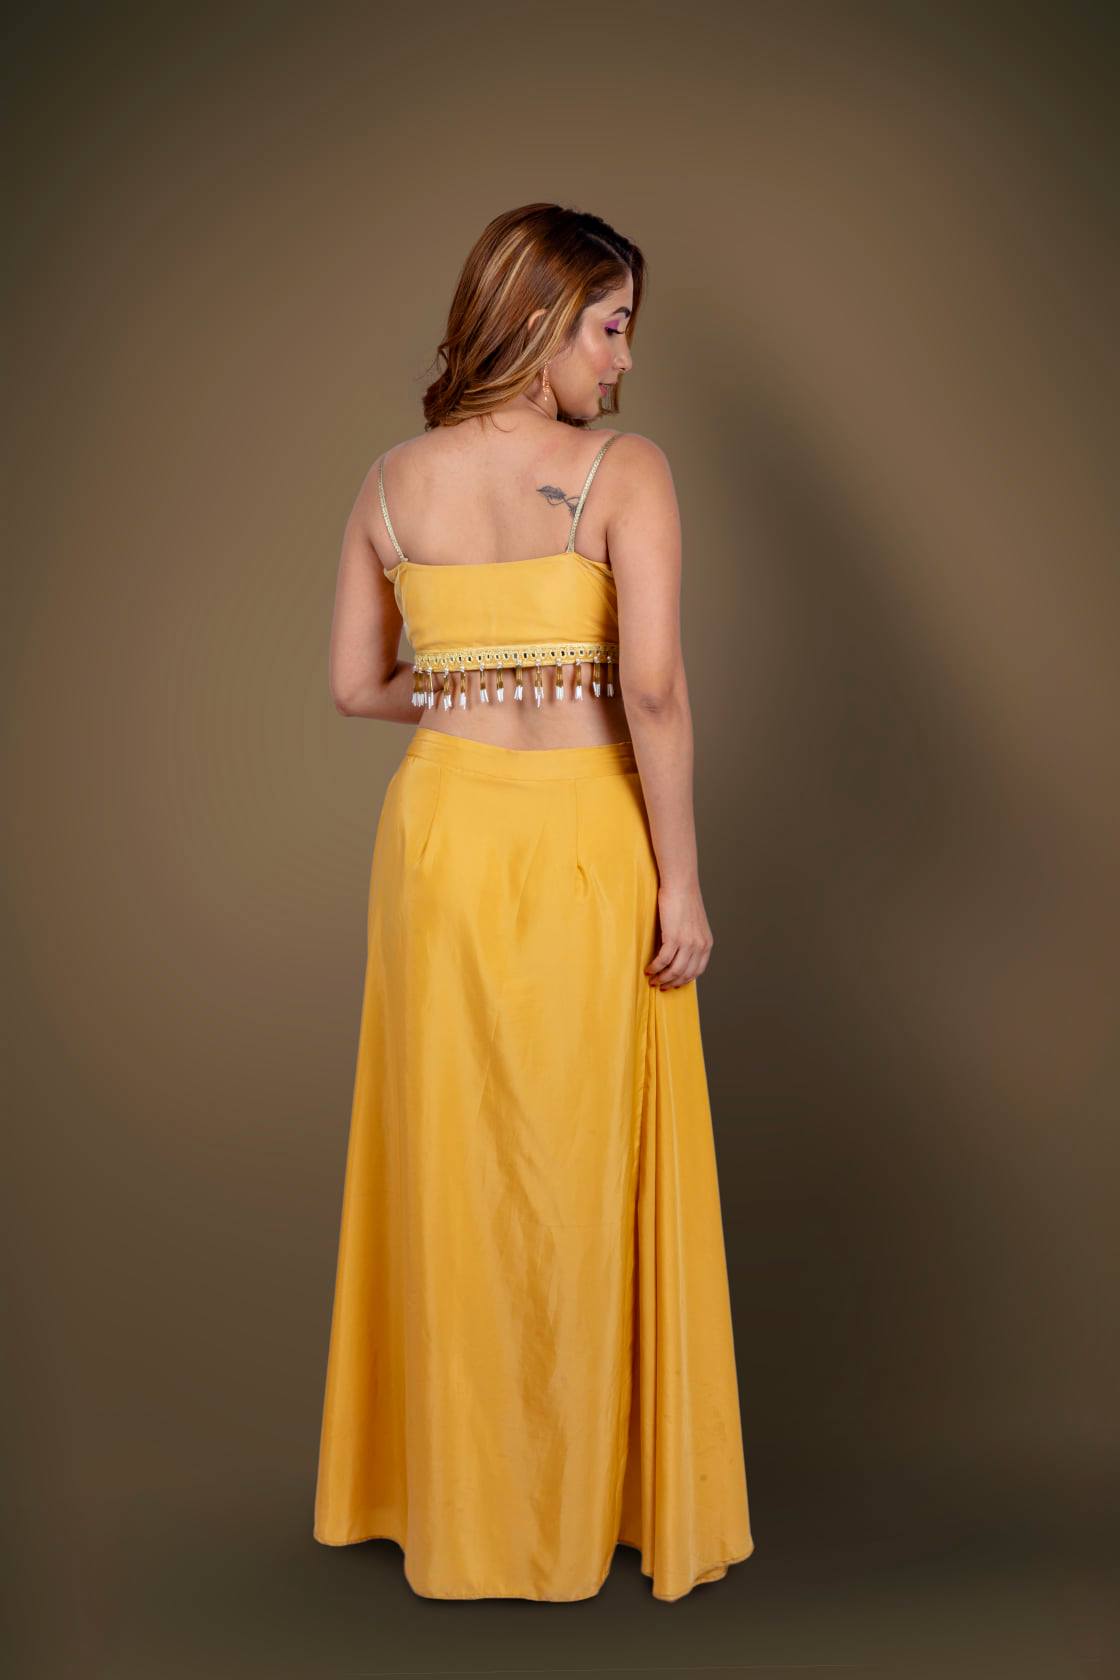 Dhoti Style Crop Top In Yellow | Dhoti salwar suits, Crop top fashion,  Fashion tops blouse